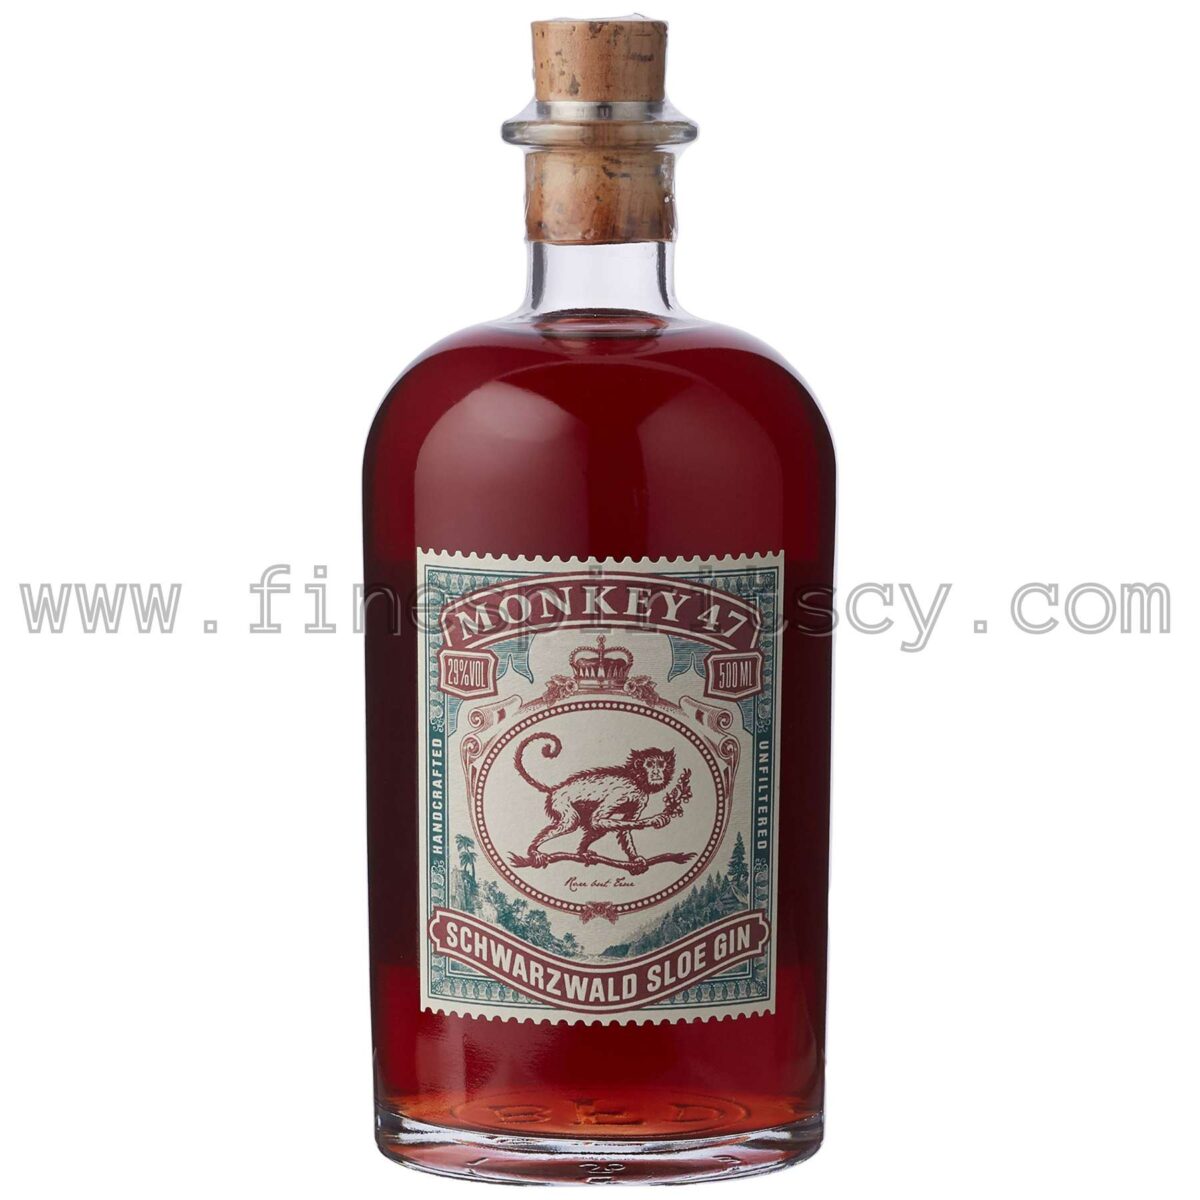 Monkey 47 Schwarzwald Sloe Gin Cyprus Price Best Cheap 500ml 50cl 0.5L Fine Spirits CY